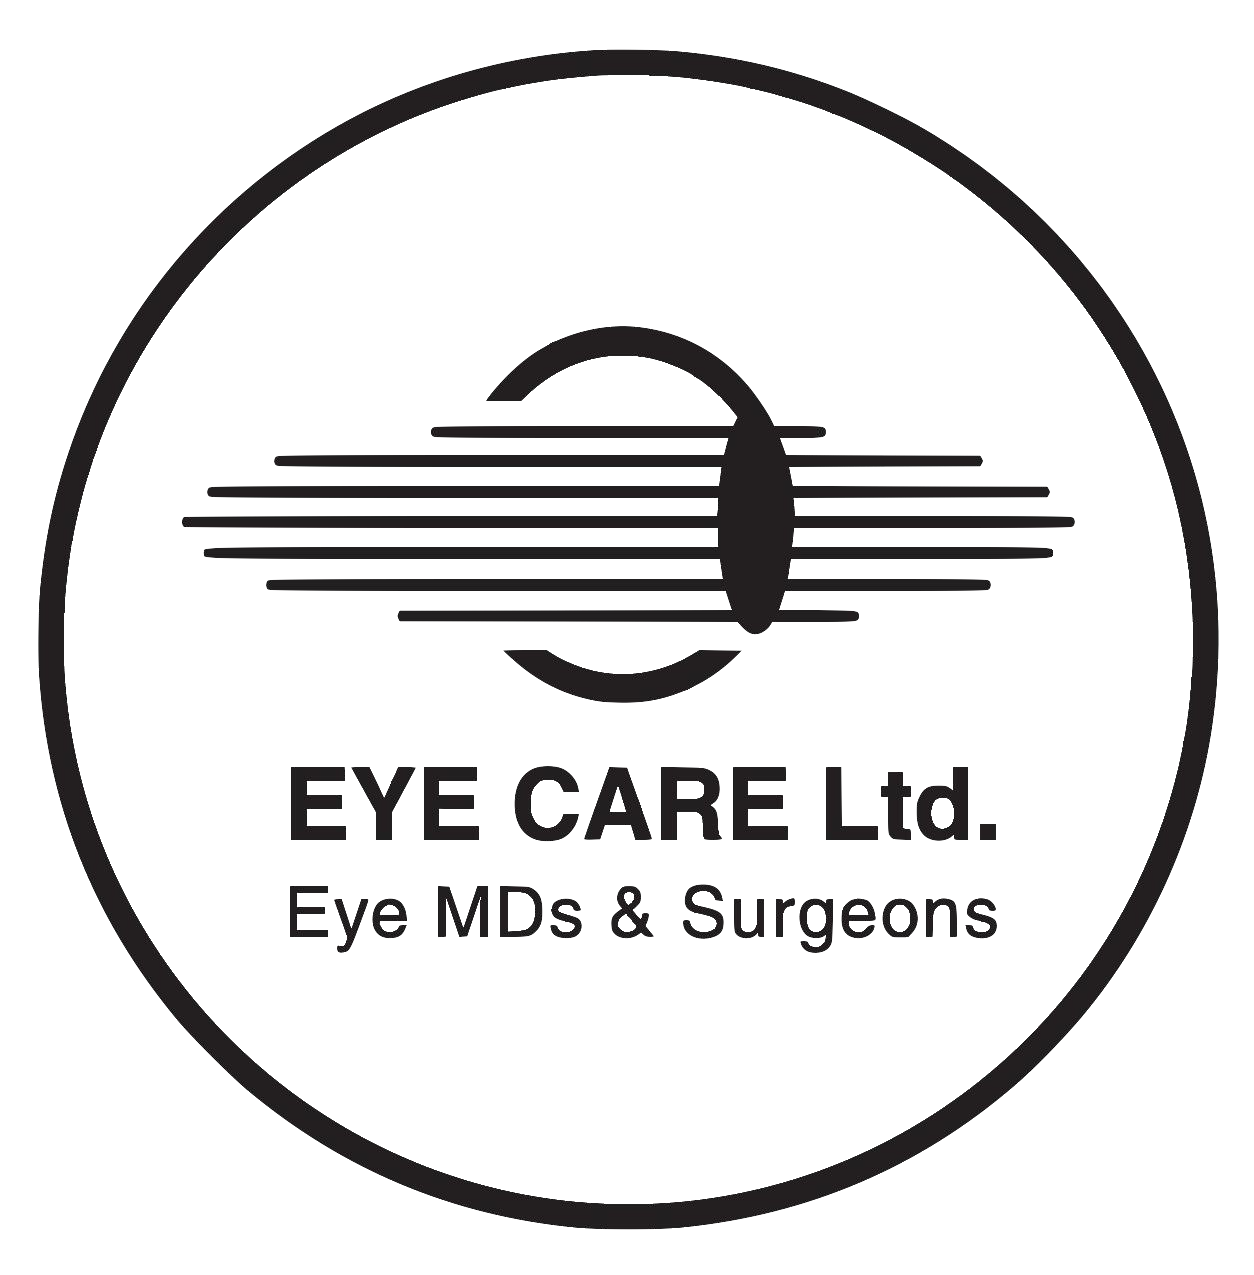 Eye Care Ltd - Ophthalmologists, Eye Surgeons